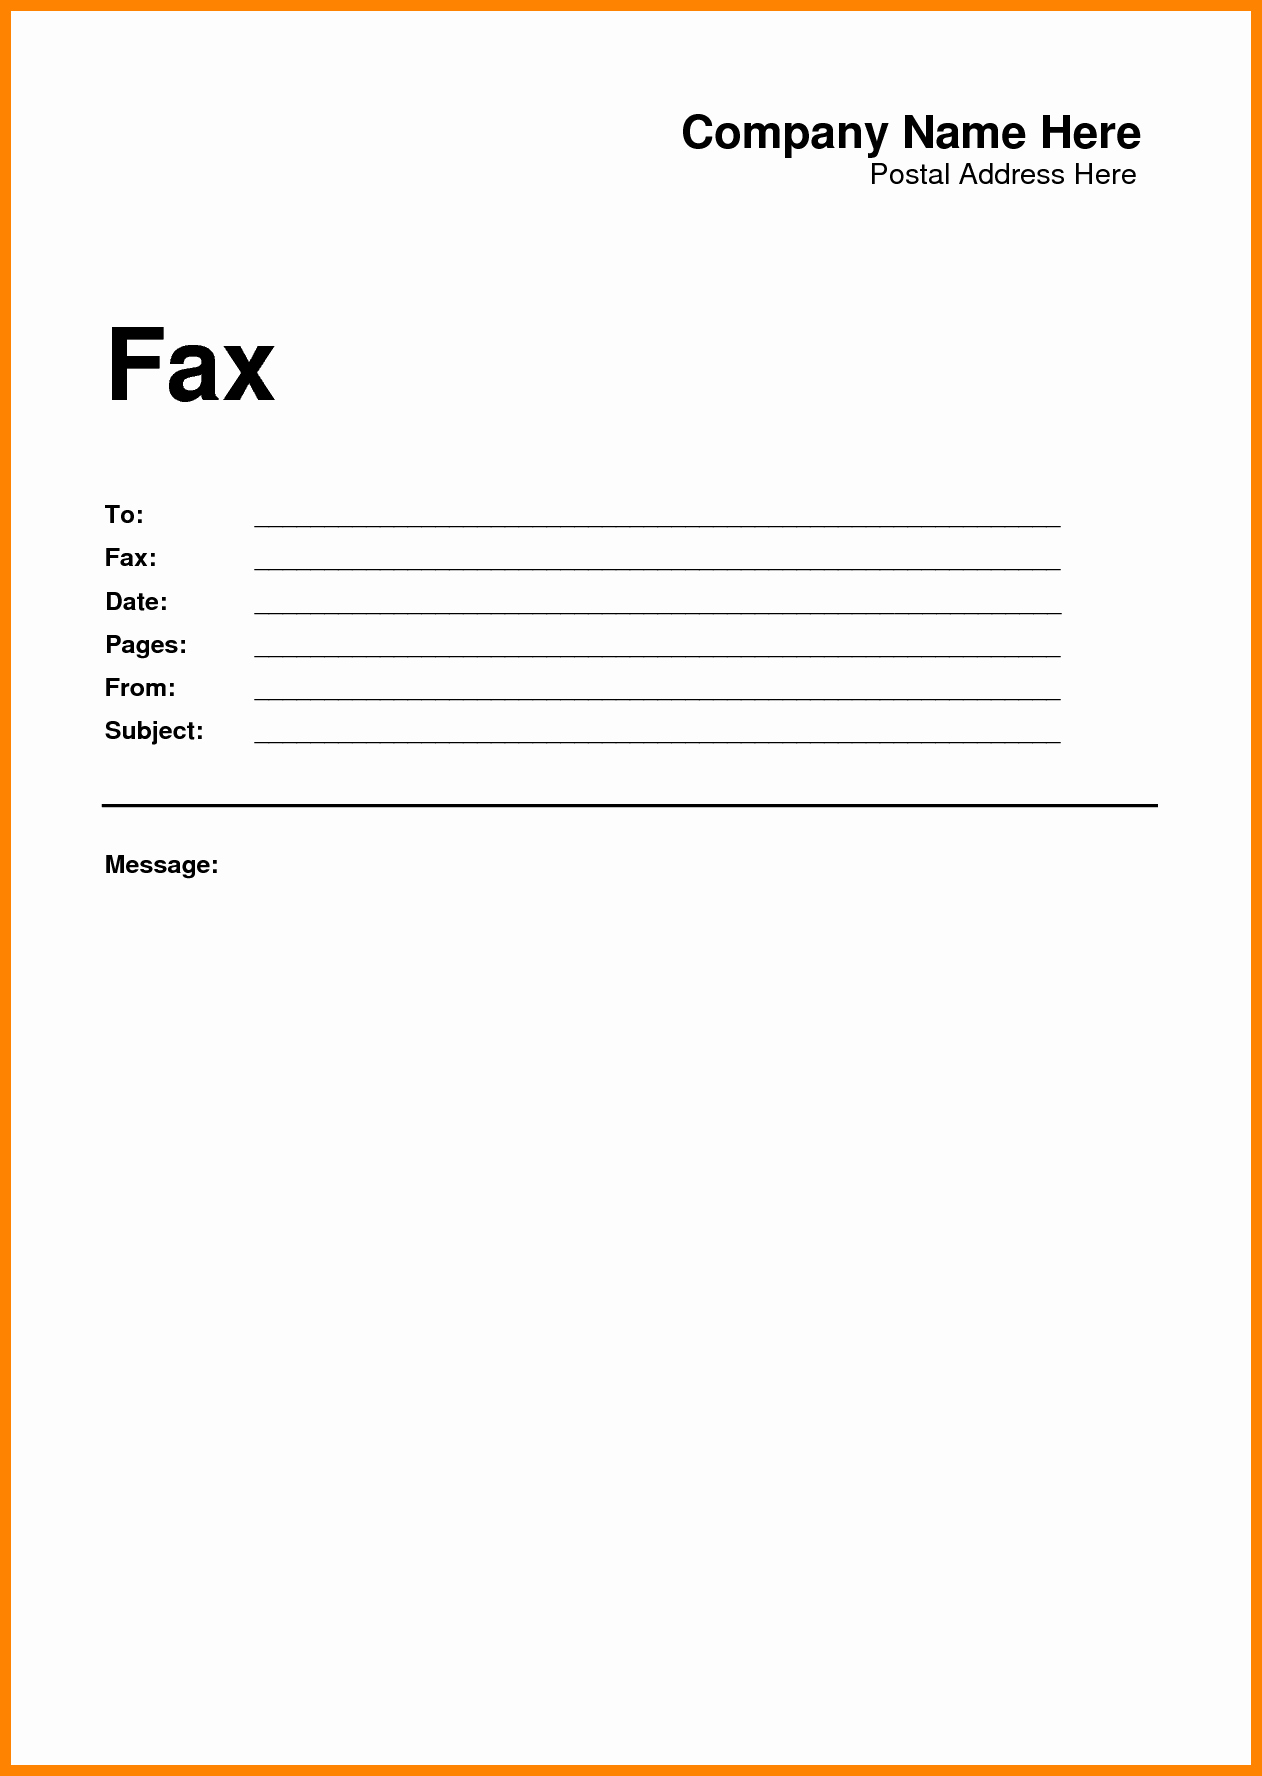 Fax Cover Sheet format Fresh 6 Free Fax Cover Sheet